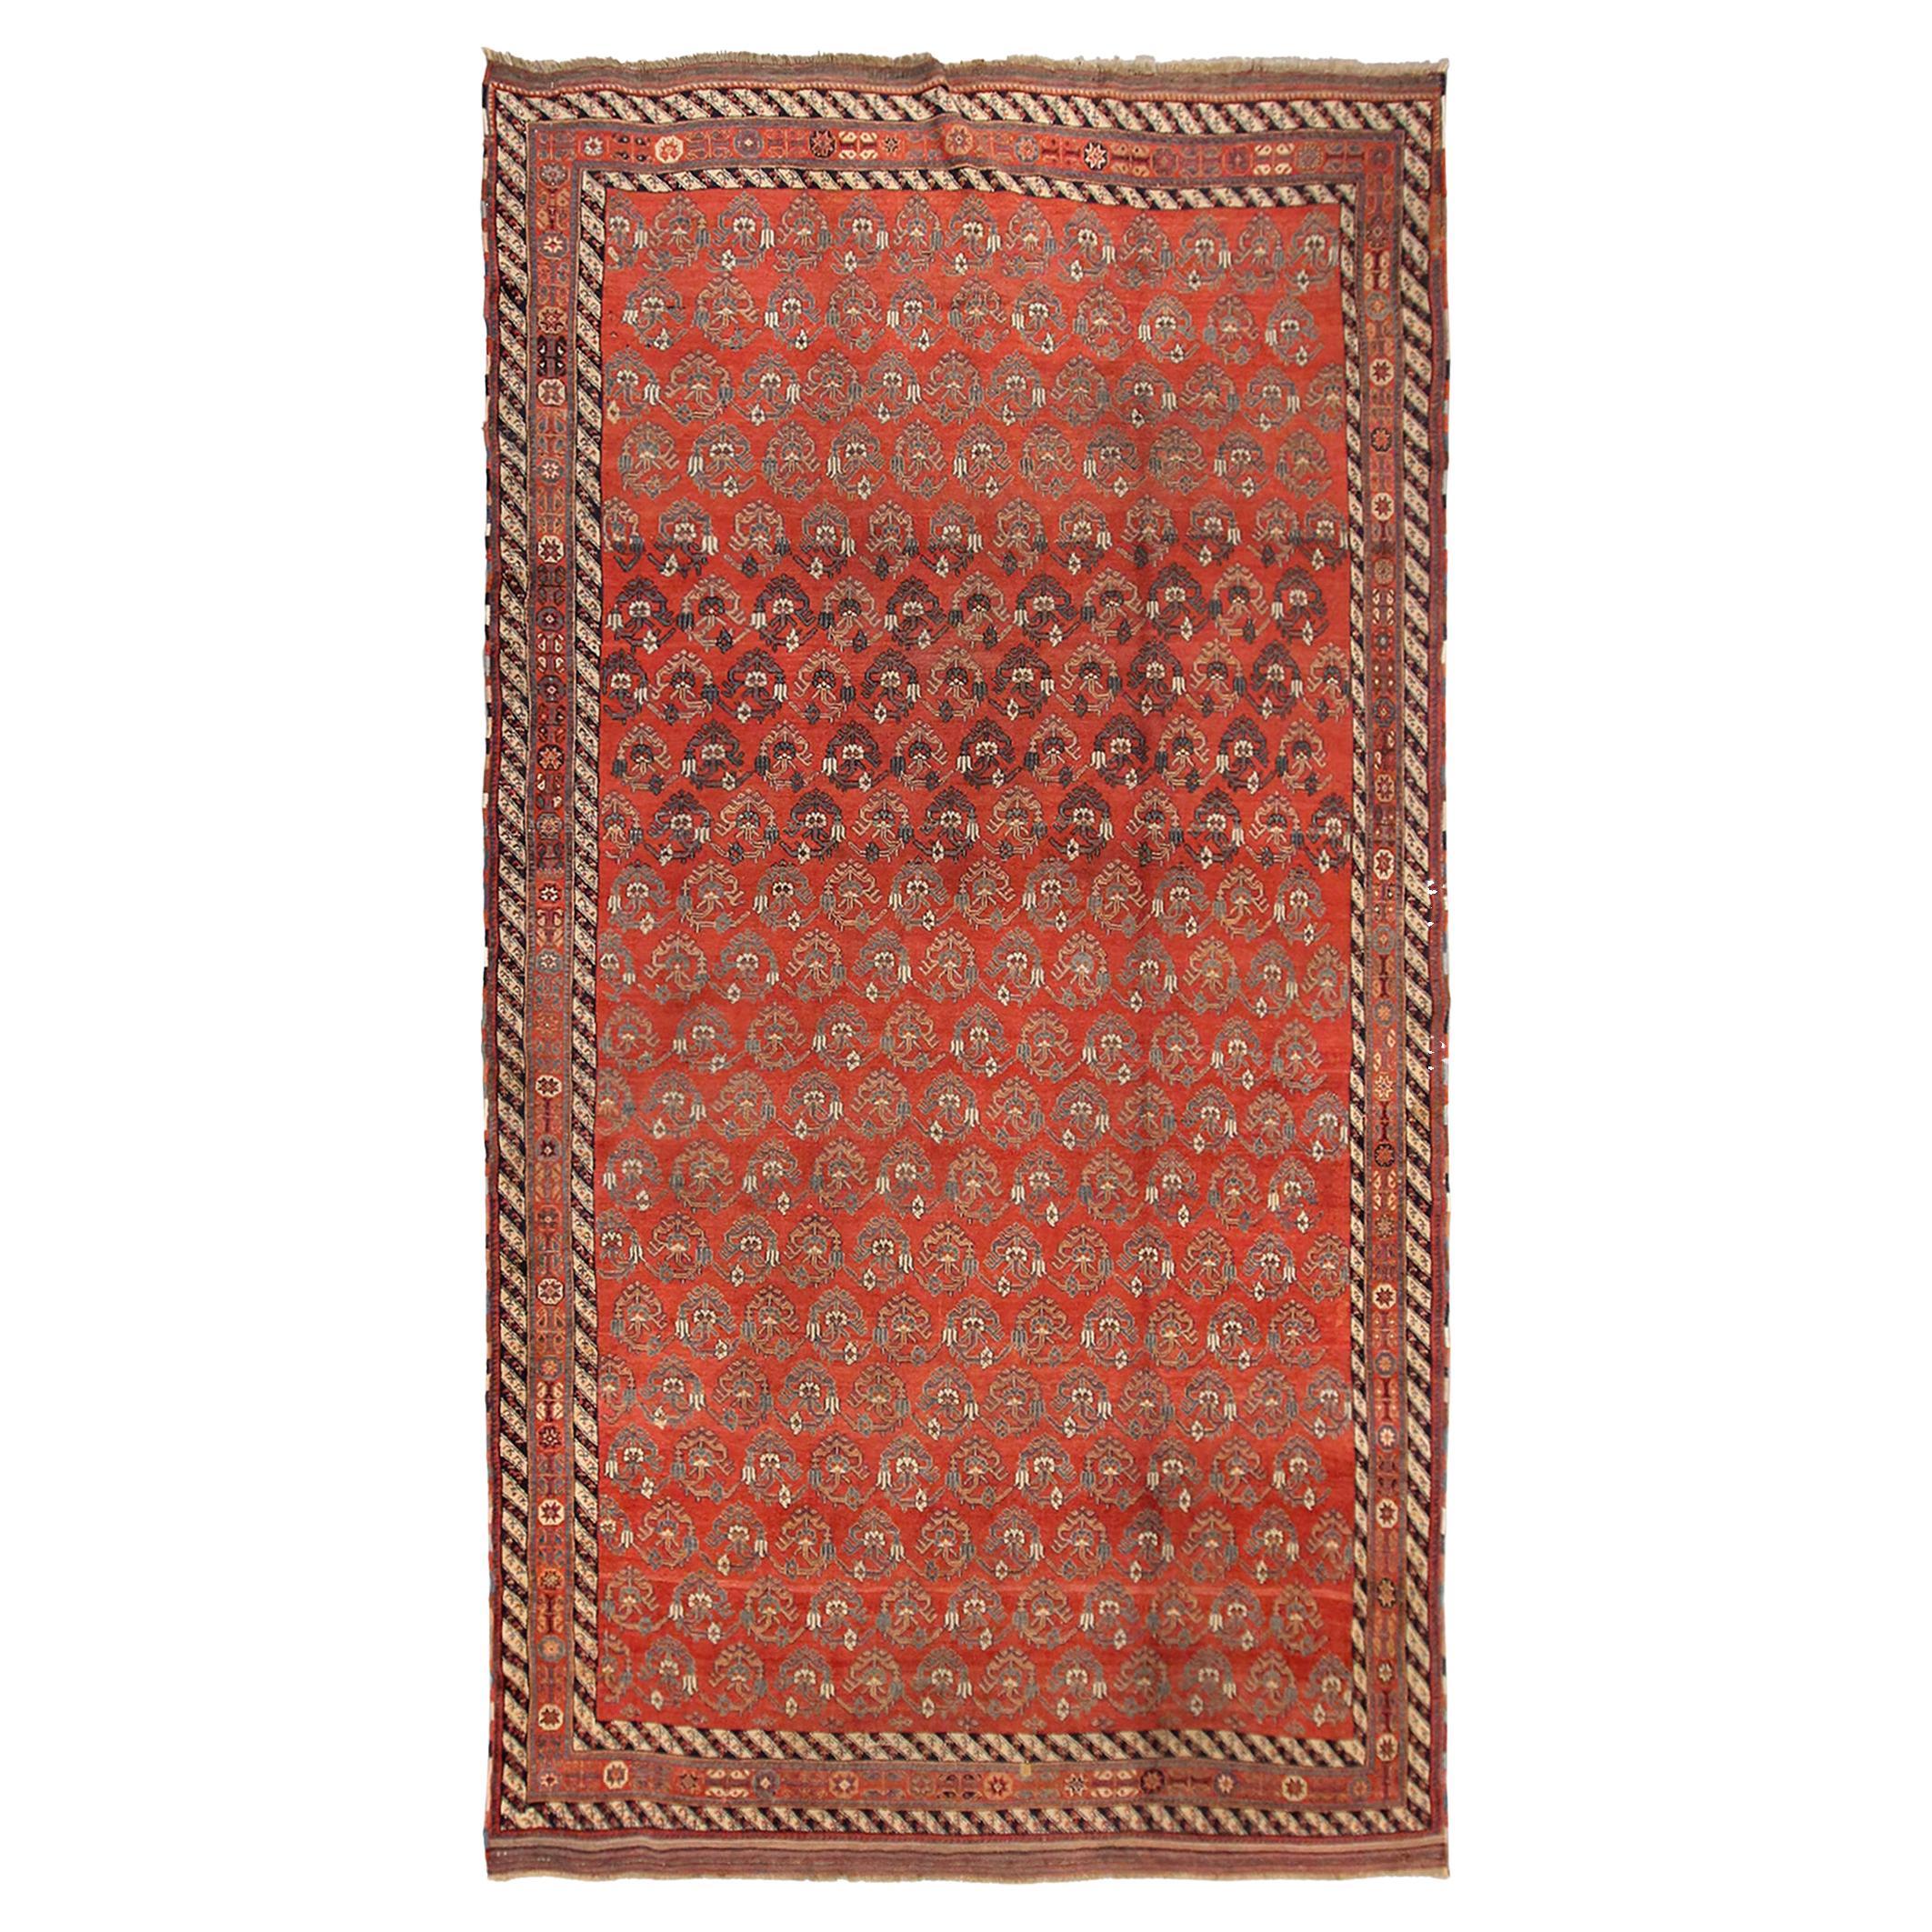 1880 Antique Afshar Rug Persian Rug Geometric Wool Foundation 7x12 206cmx376cm For Sale